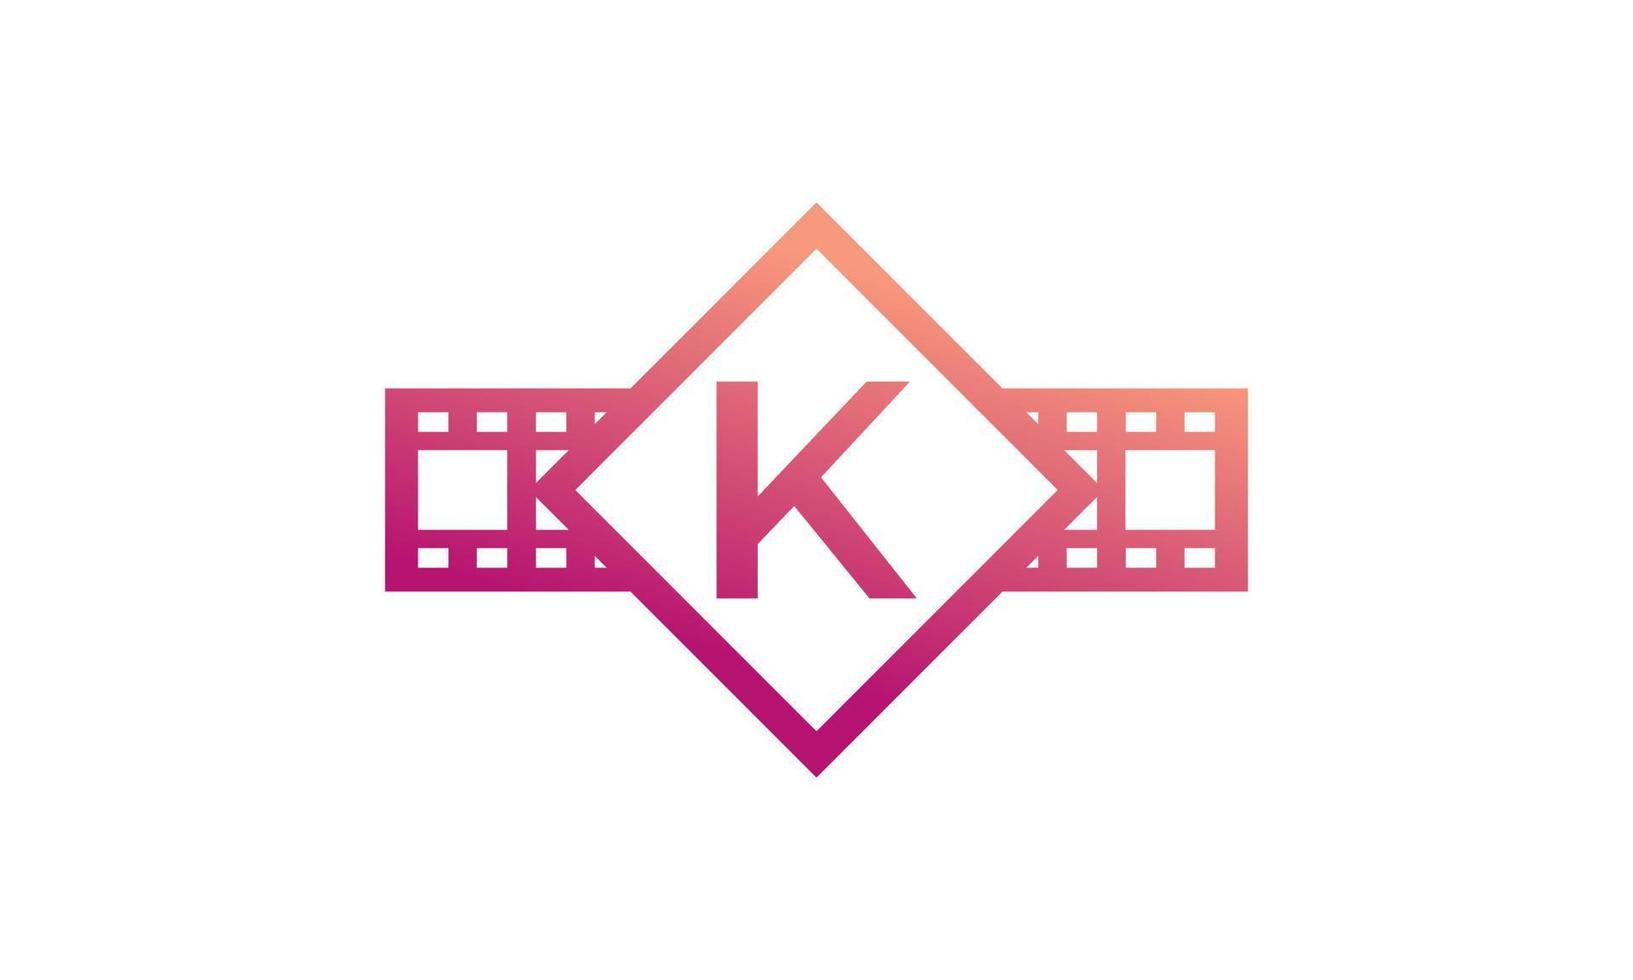 letra inicial k cuadrado con rayas de carrete tira de película para película cine producción estudio logotipo inspiración vector